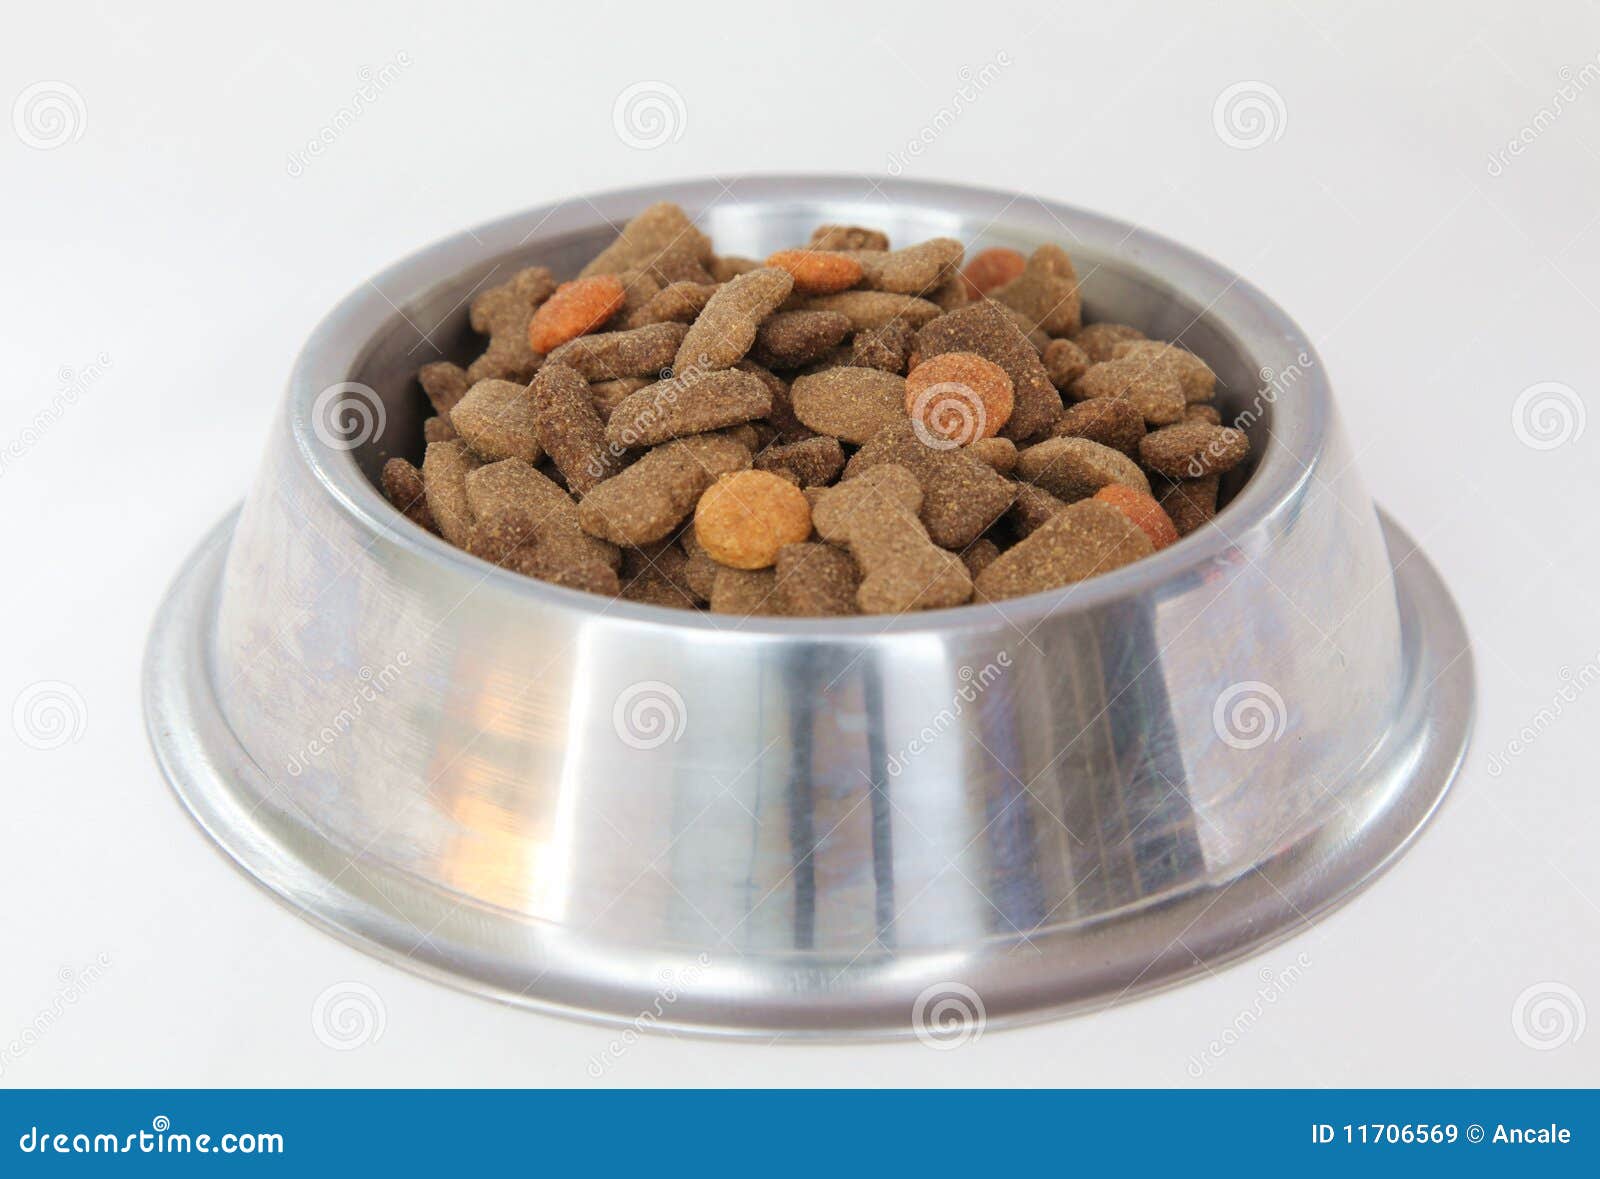 How To Make Dry Dog Food Tasty